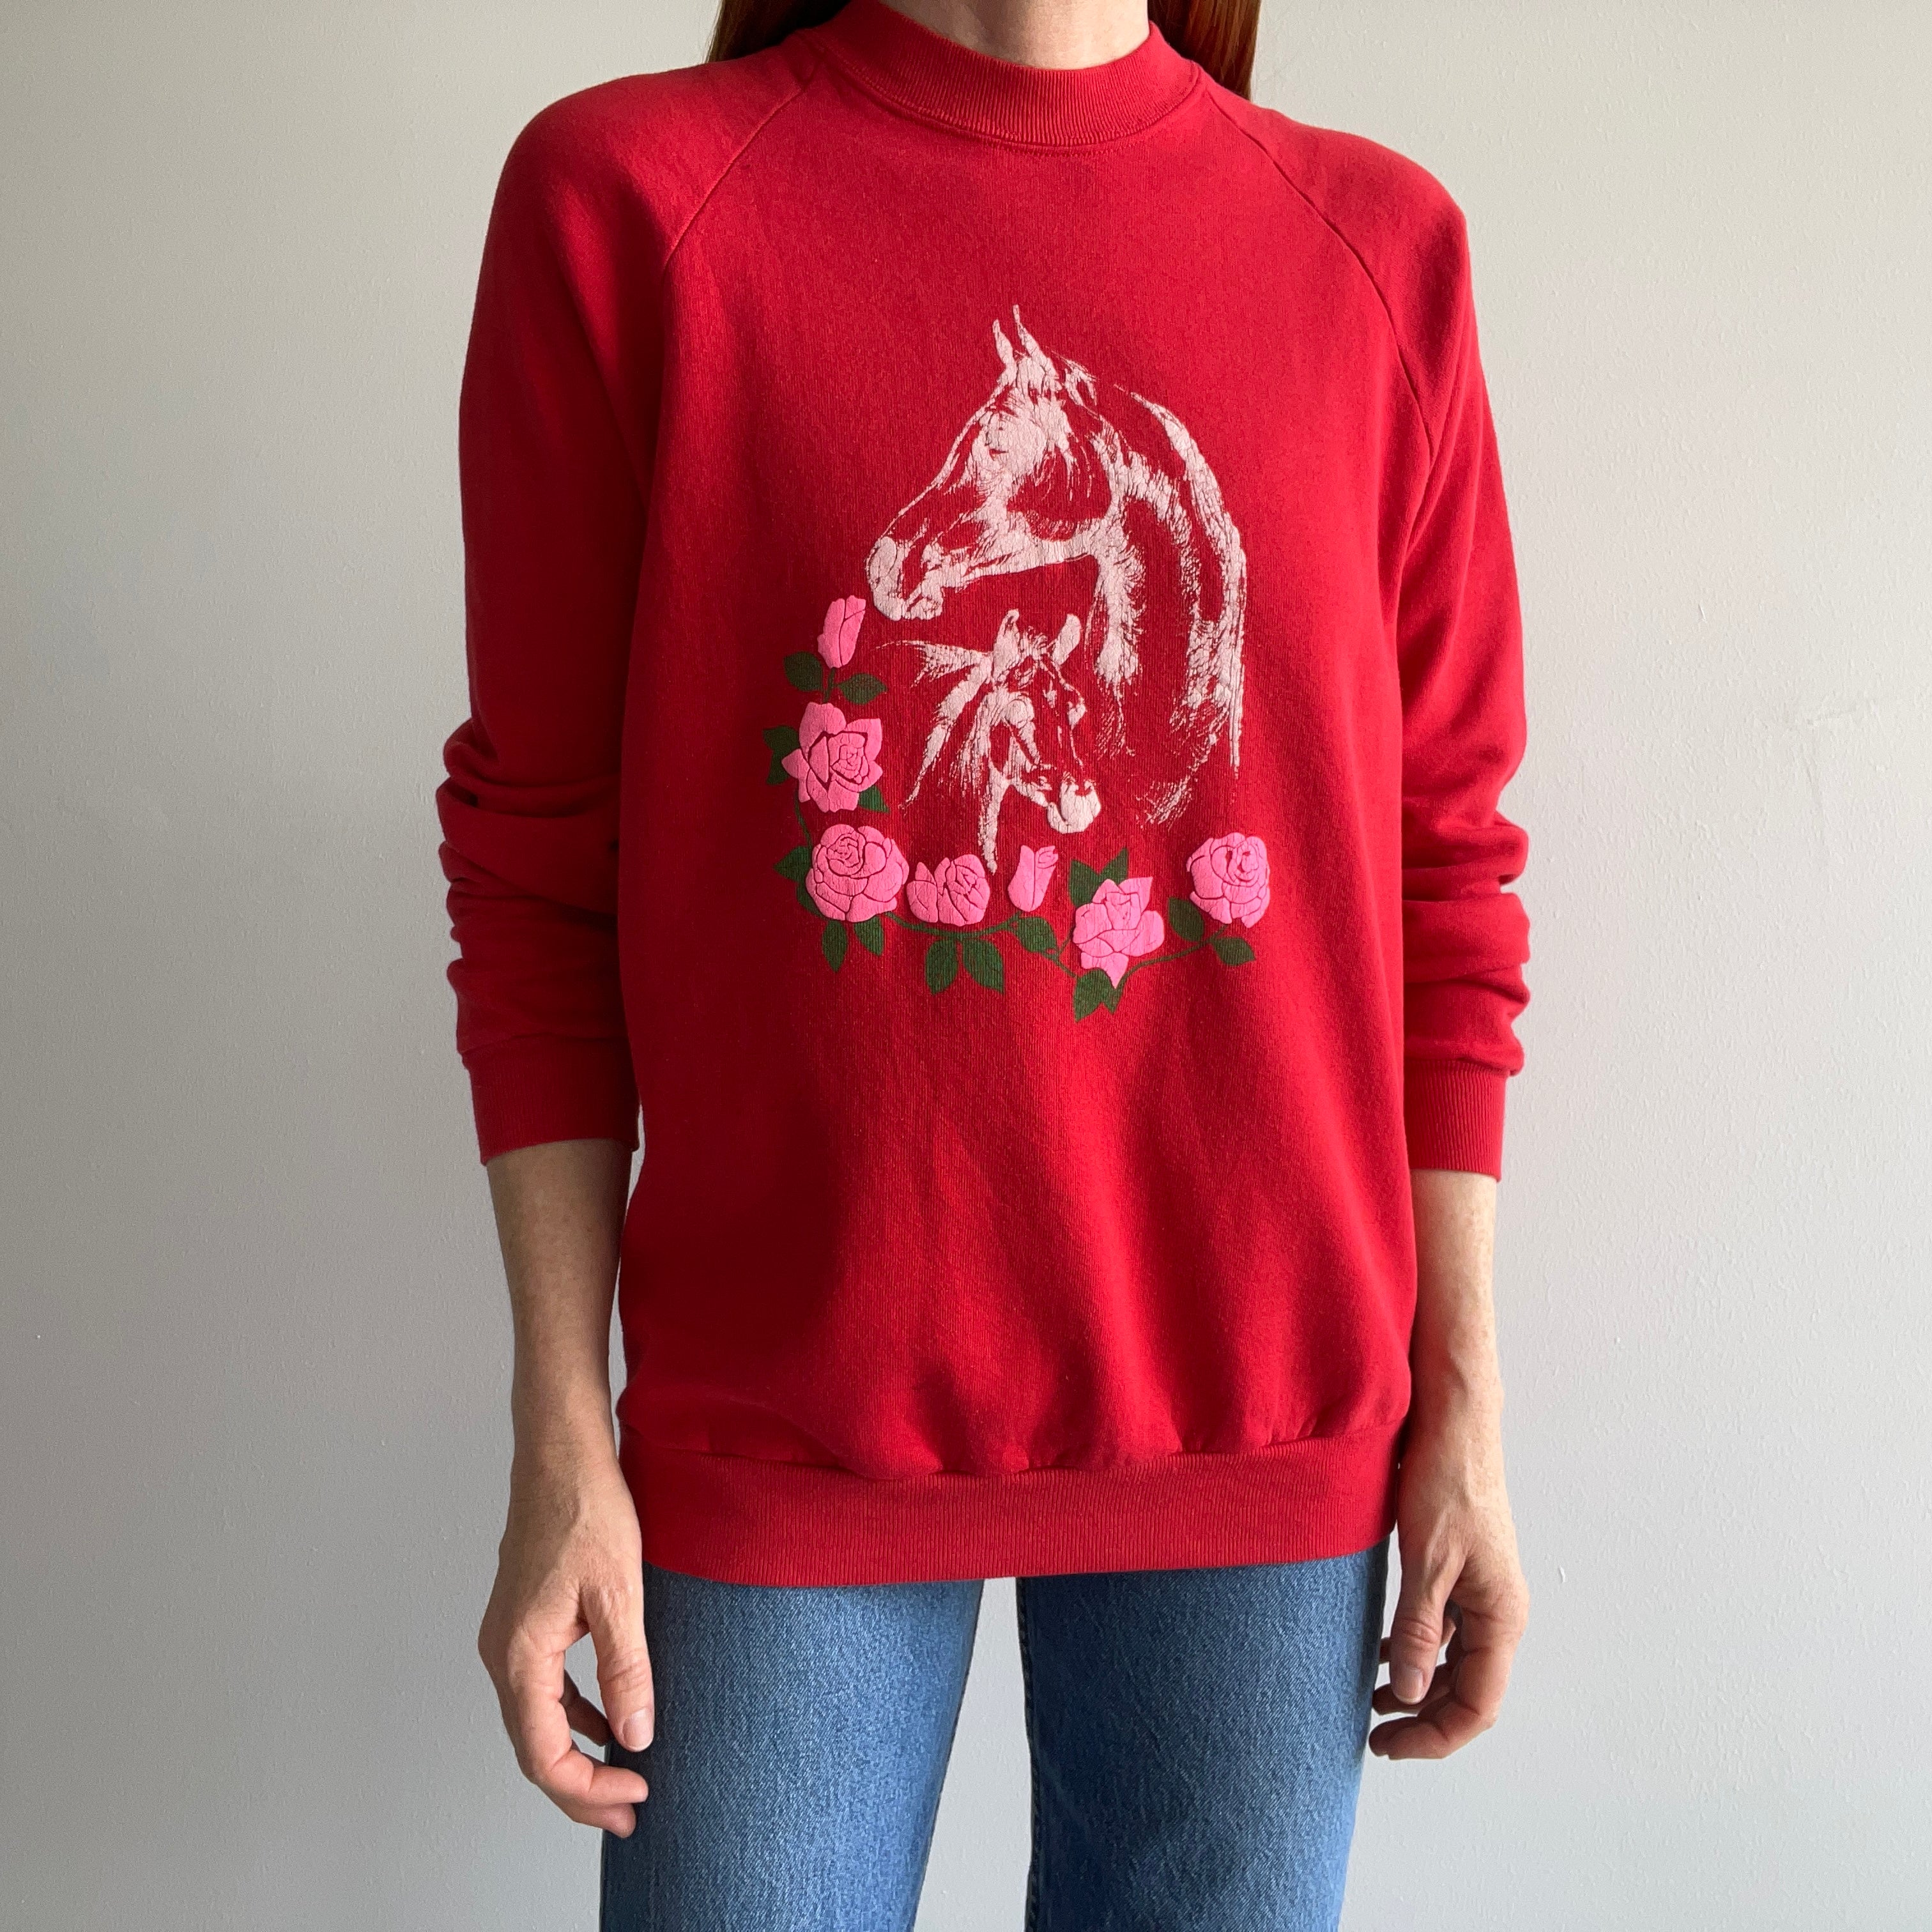 1980s Horses and Roses Sweatshirt